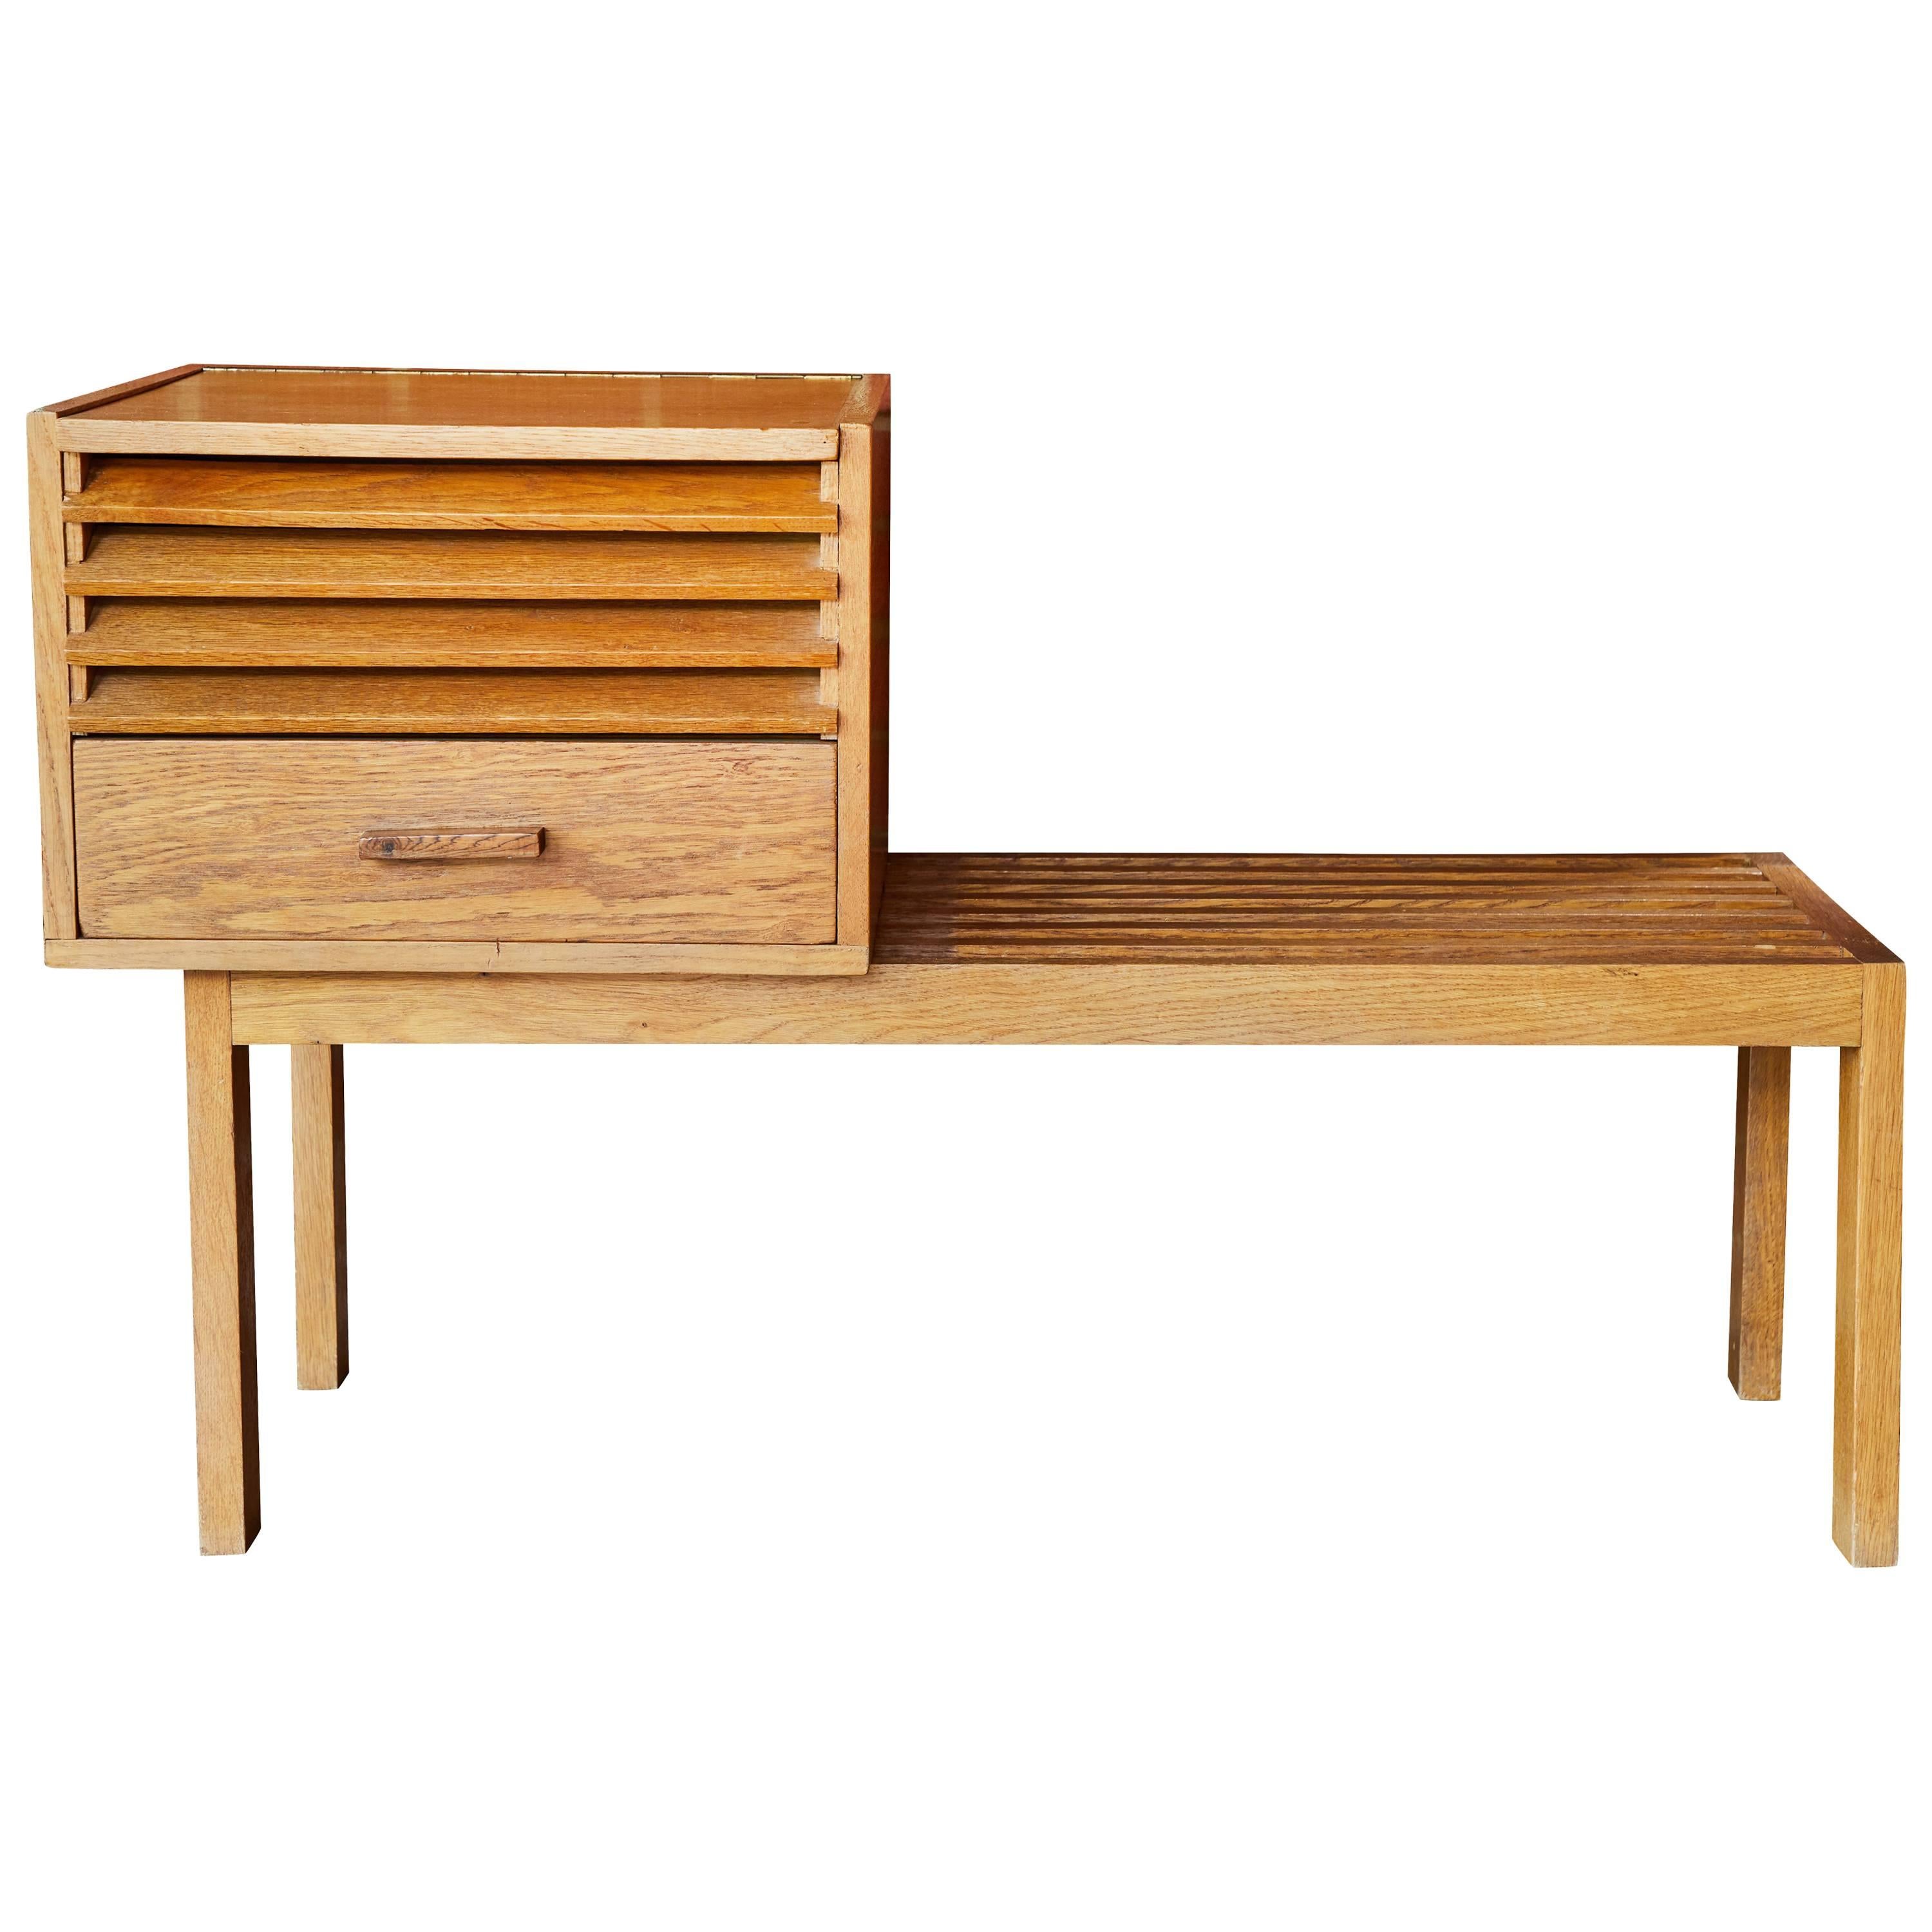 1950s Scandinavian Low Bench with Modular Cabinet